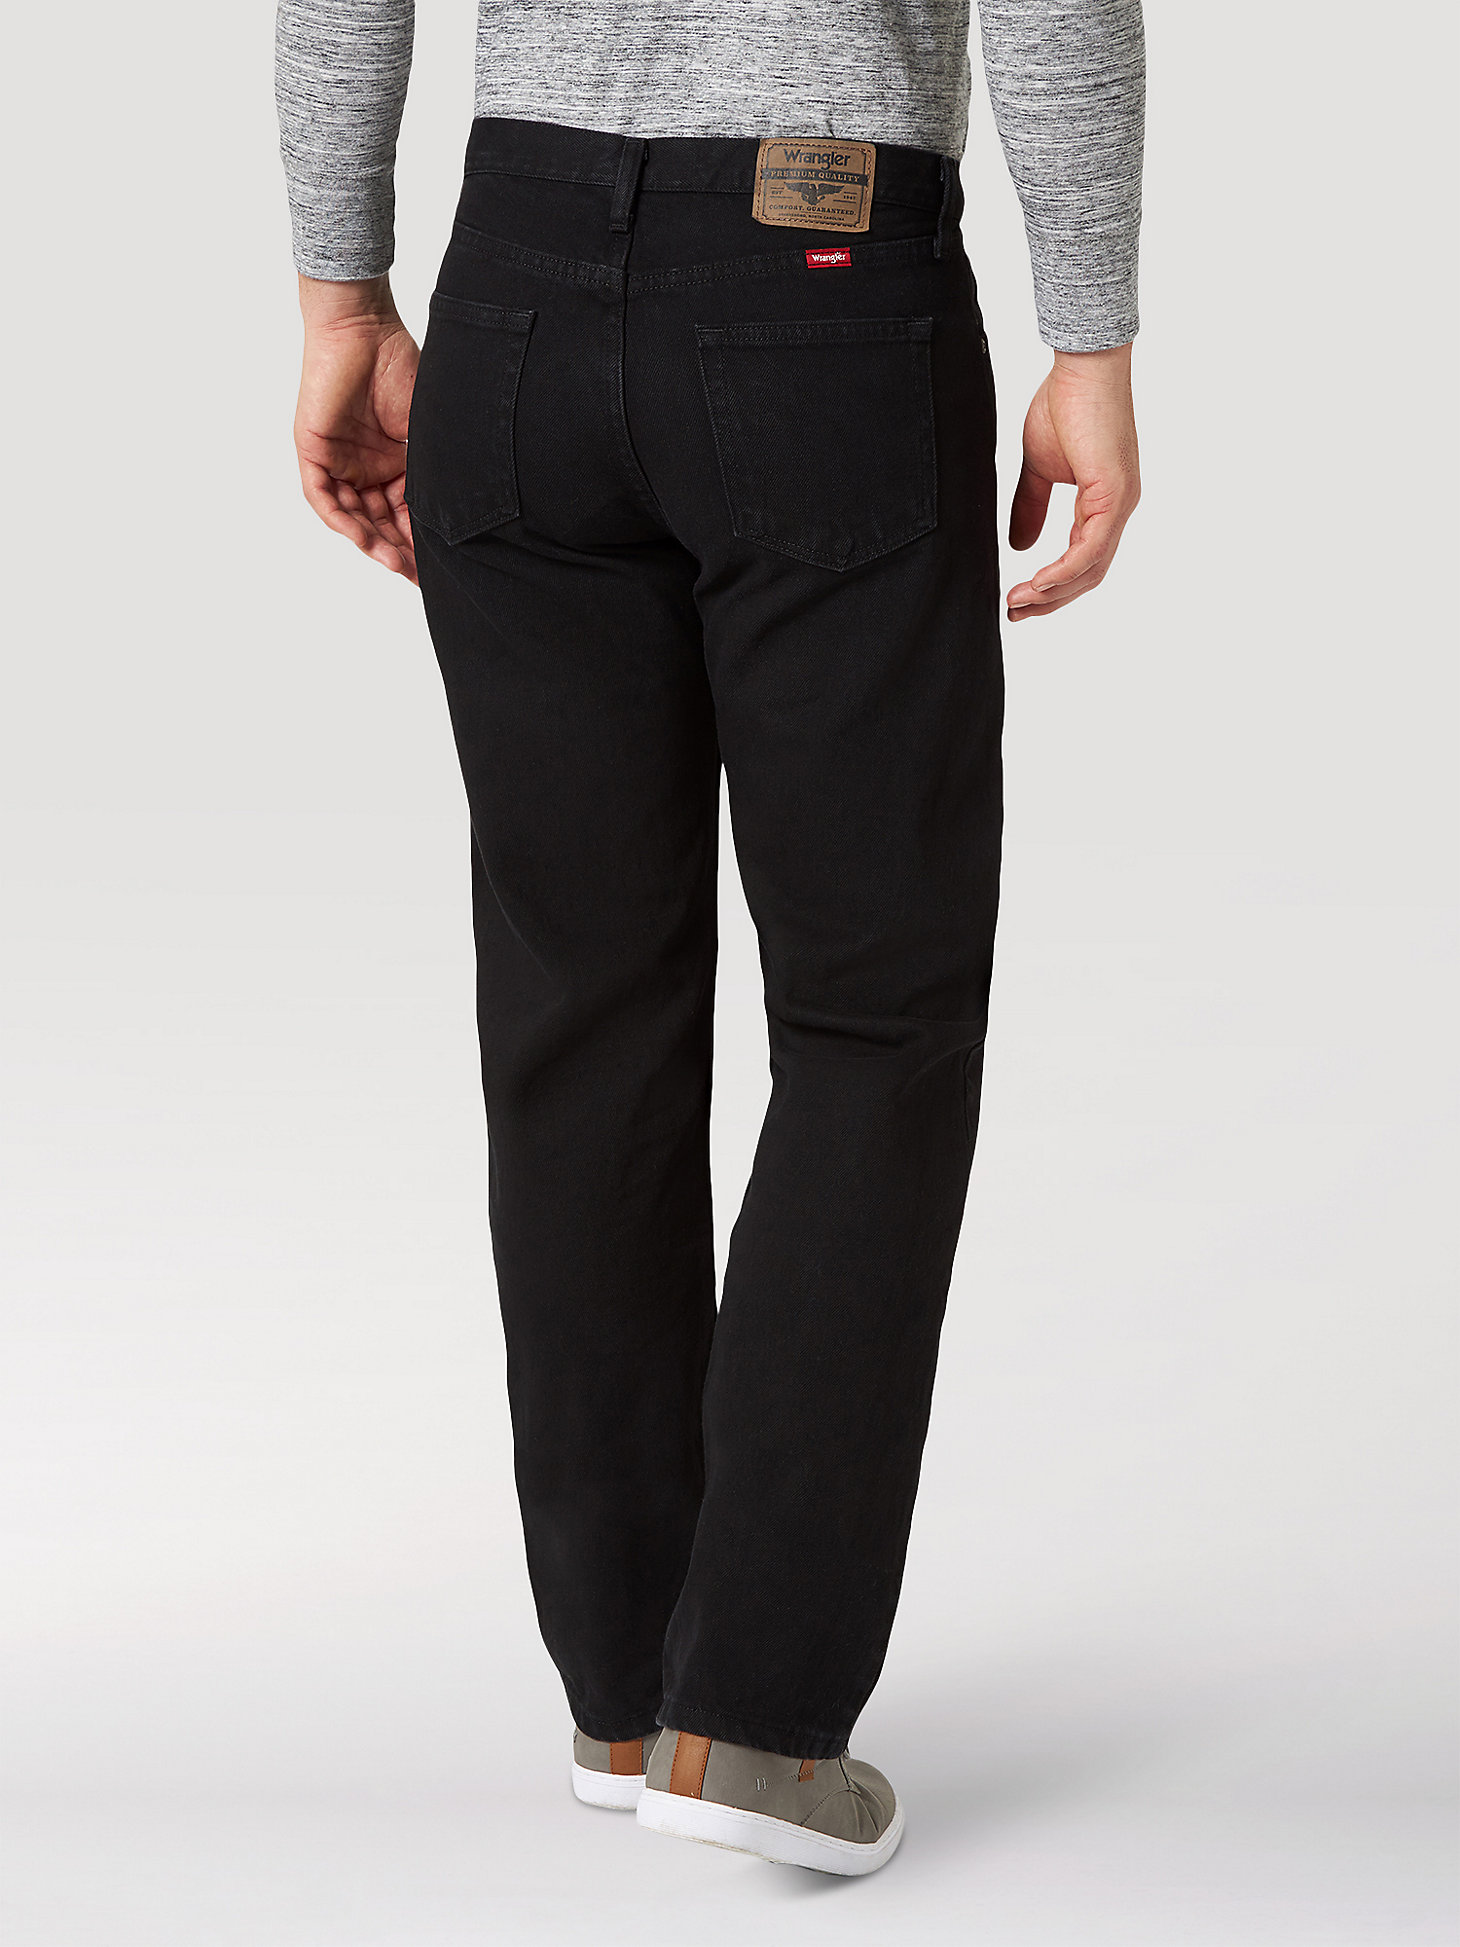 Wrangler® Five Star Premium Denim Relaxed Fit Jean in Coal Black alternative view 1